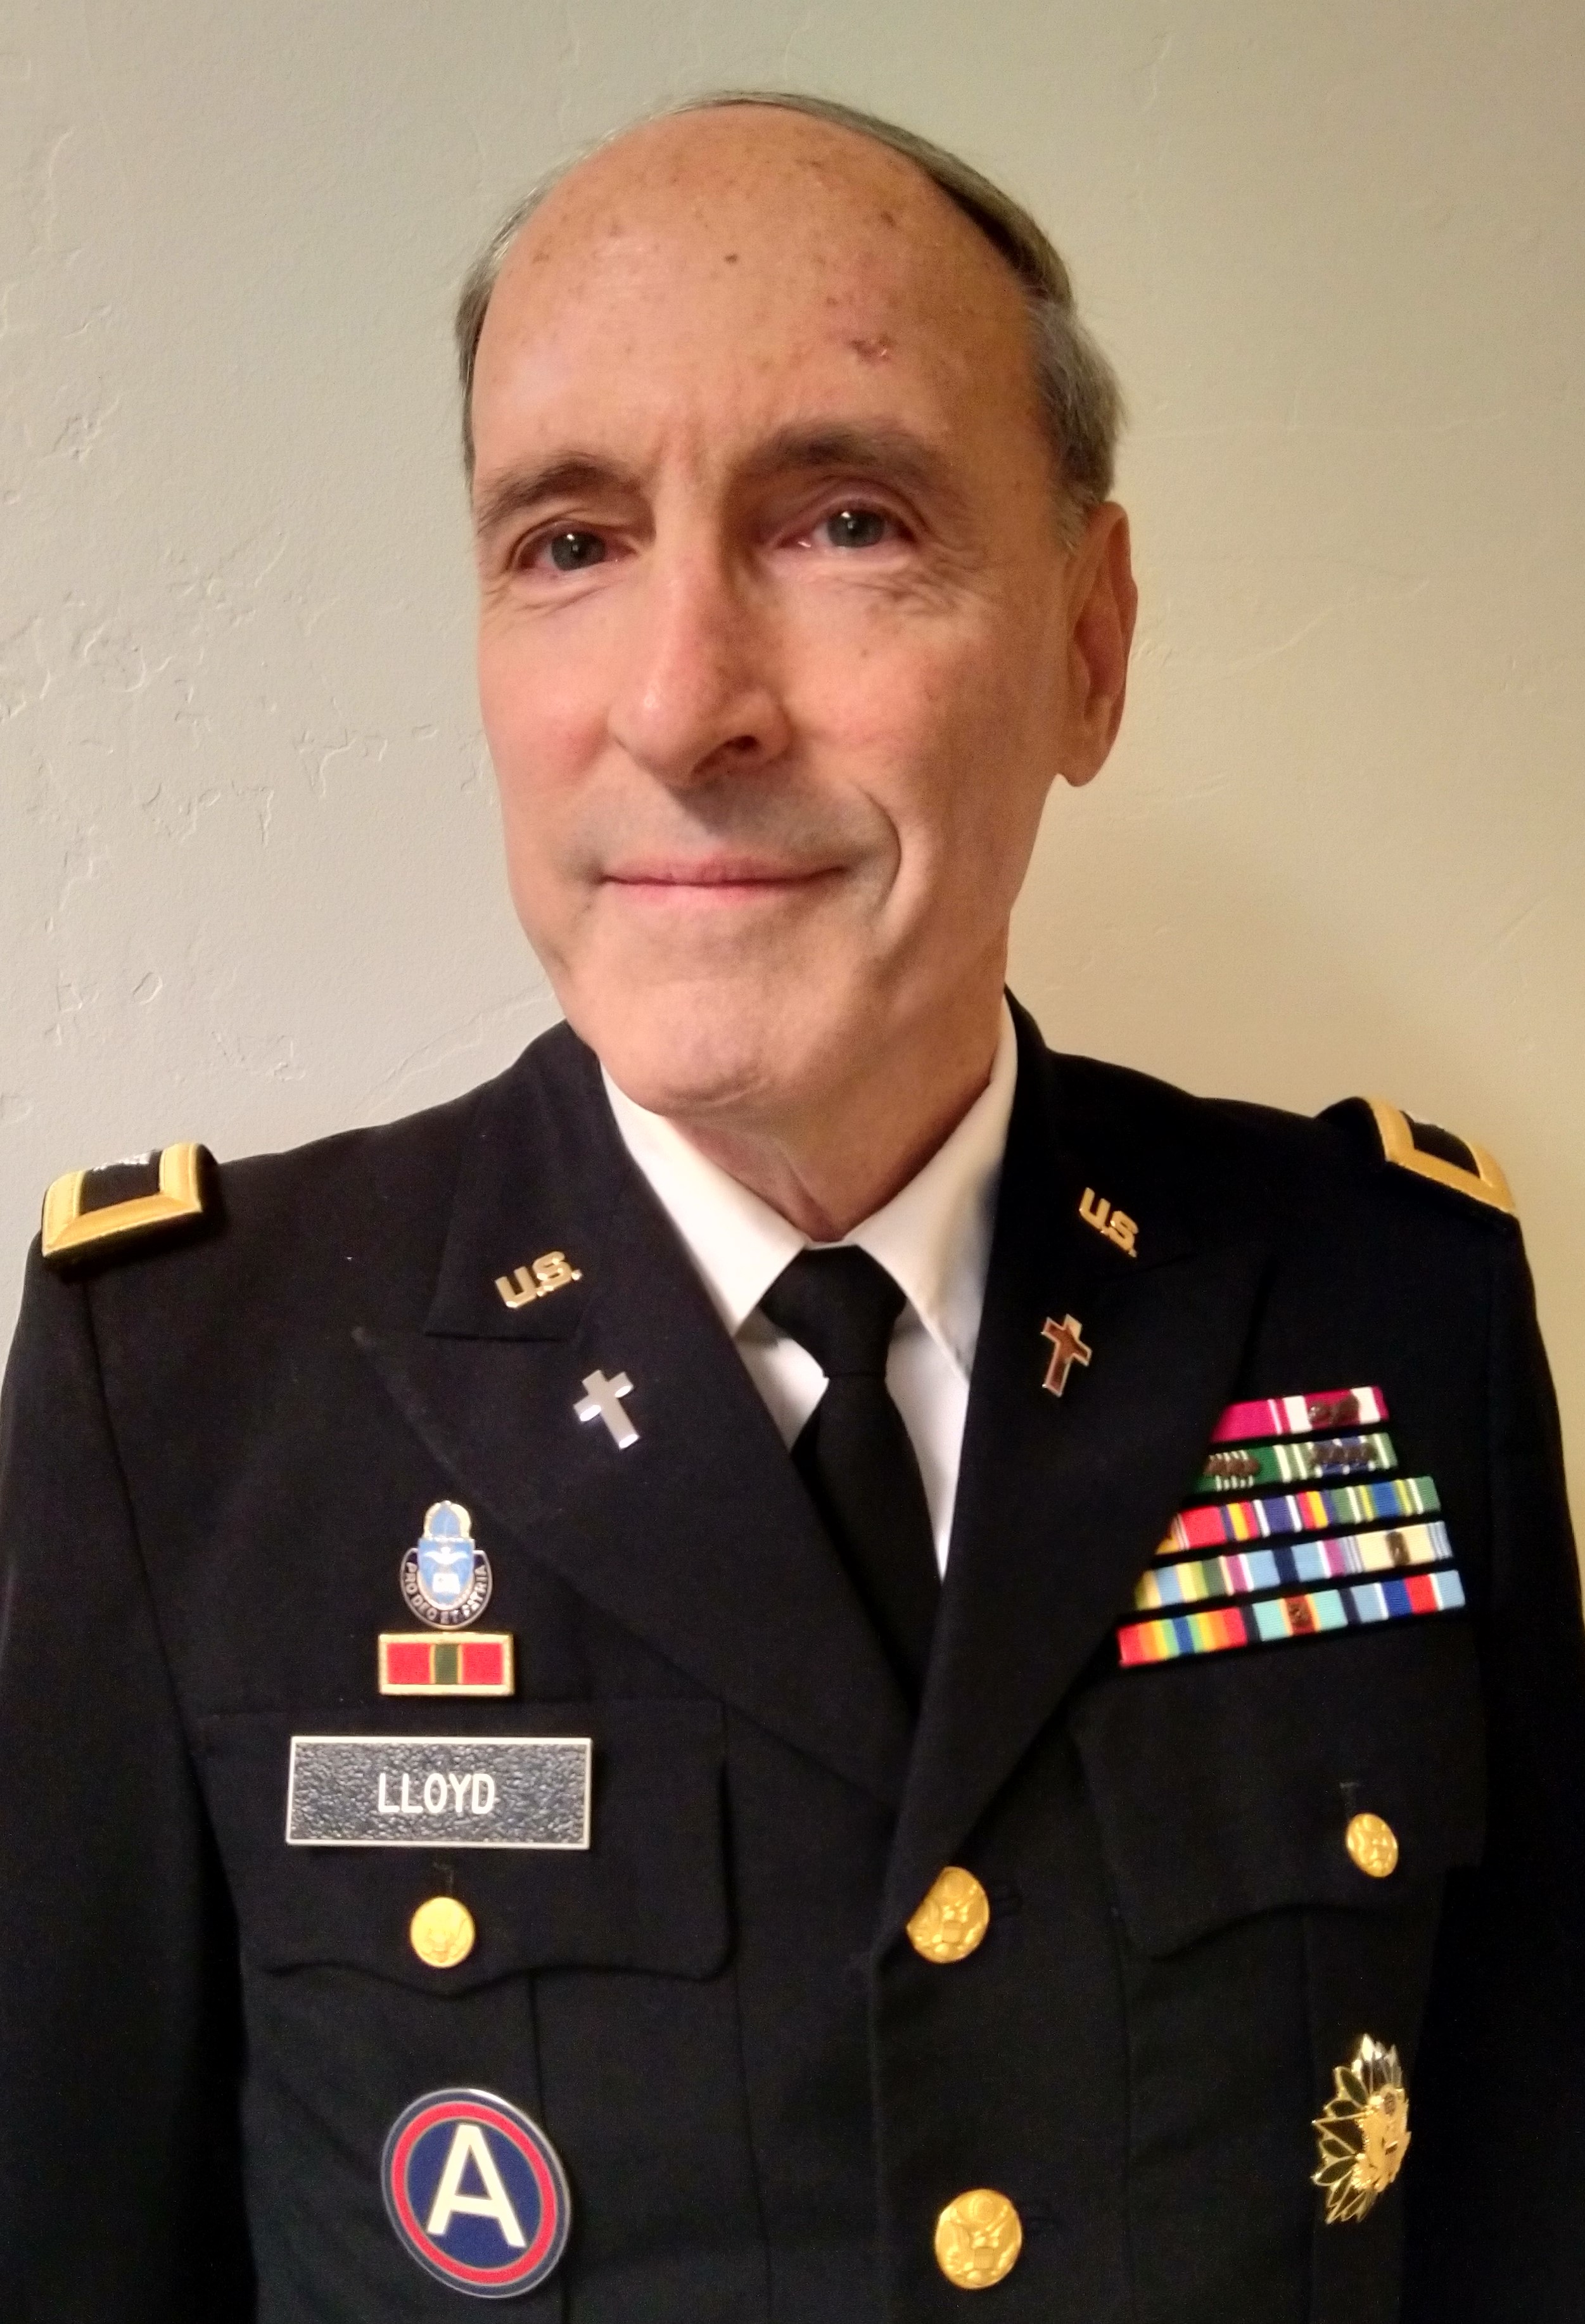 Chaplain Colonel (U.S. Army, retired) Scottie R. Lloyd